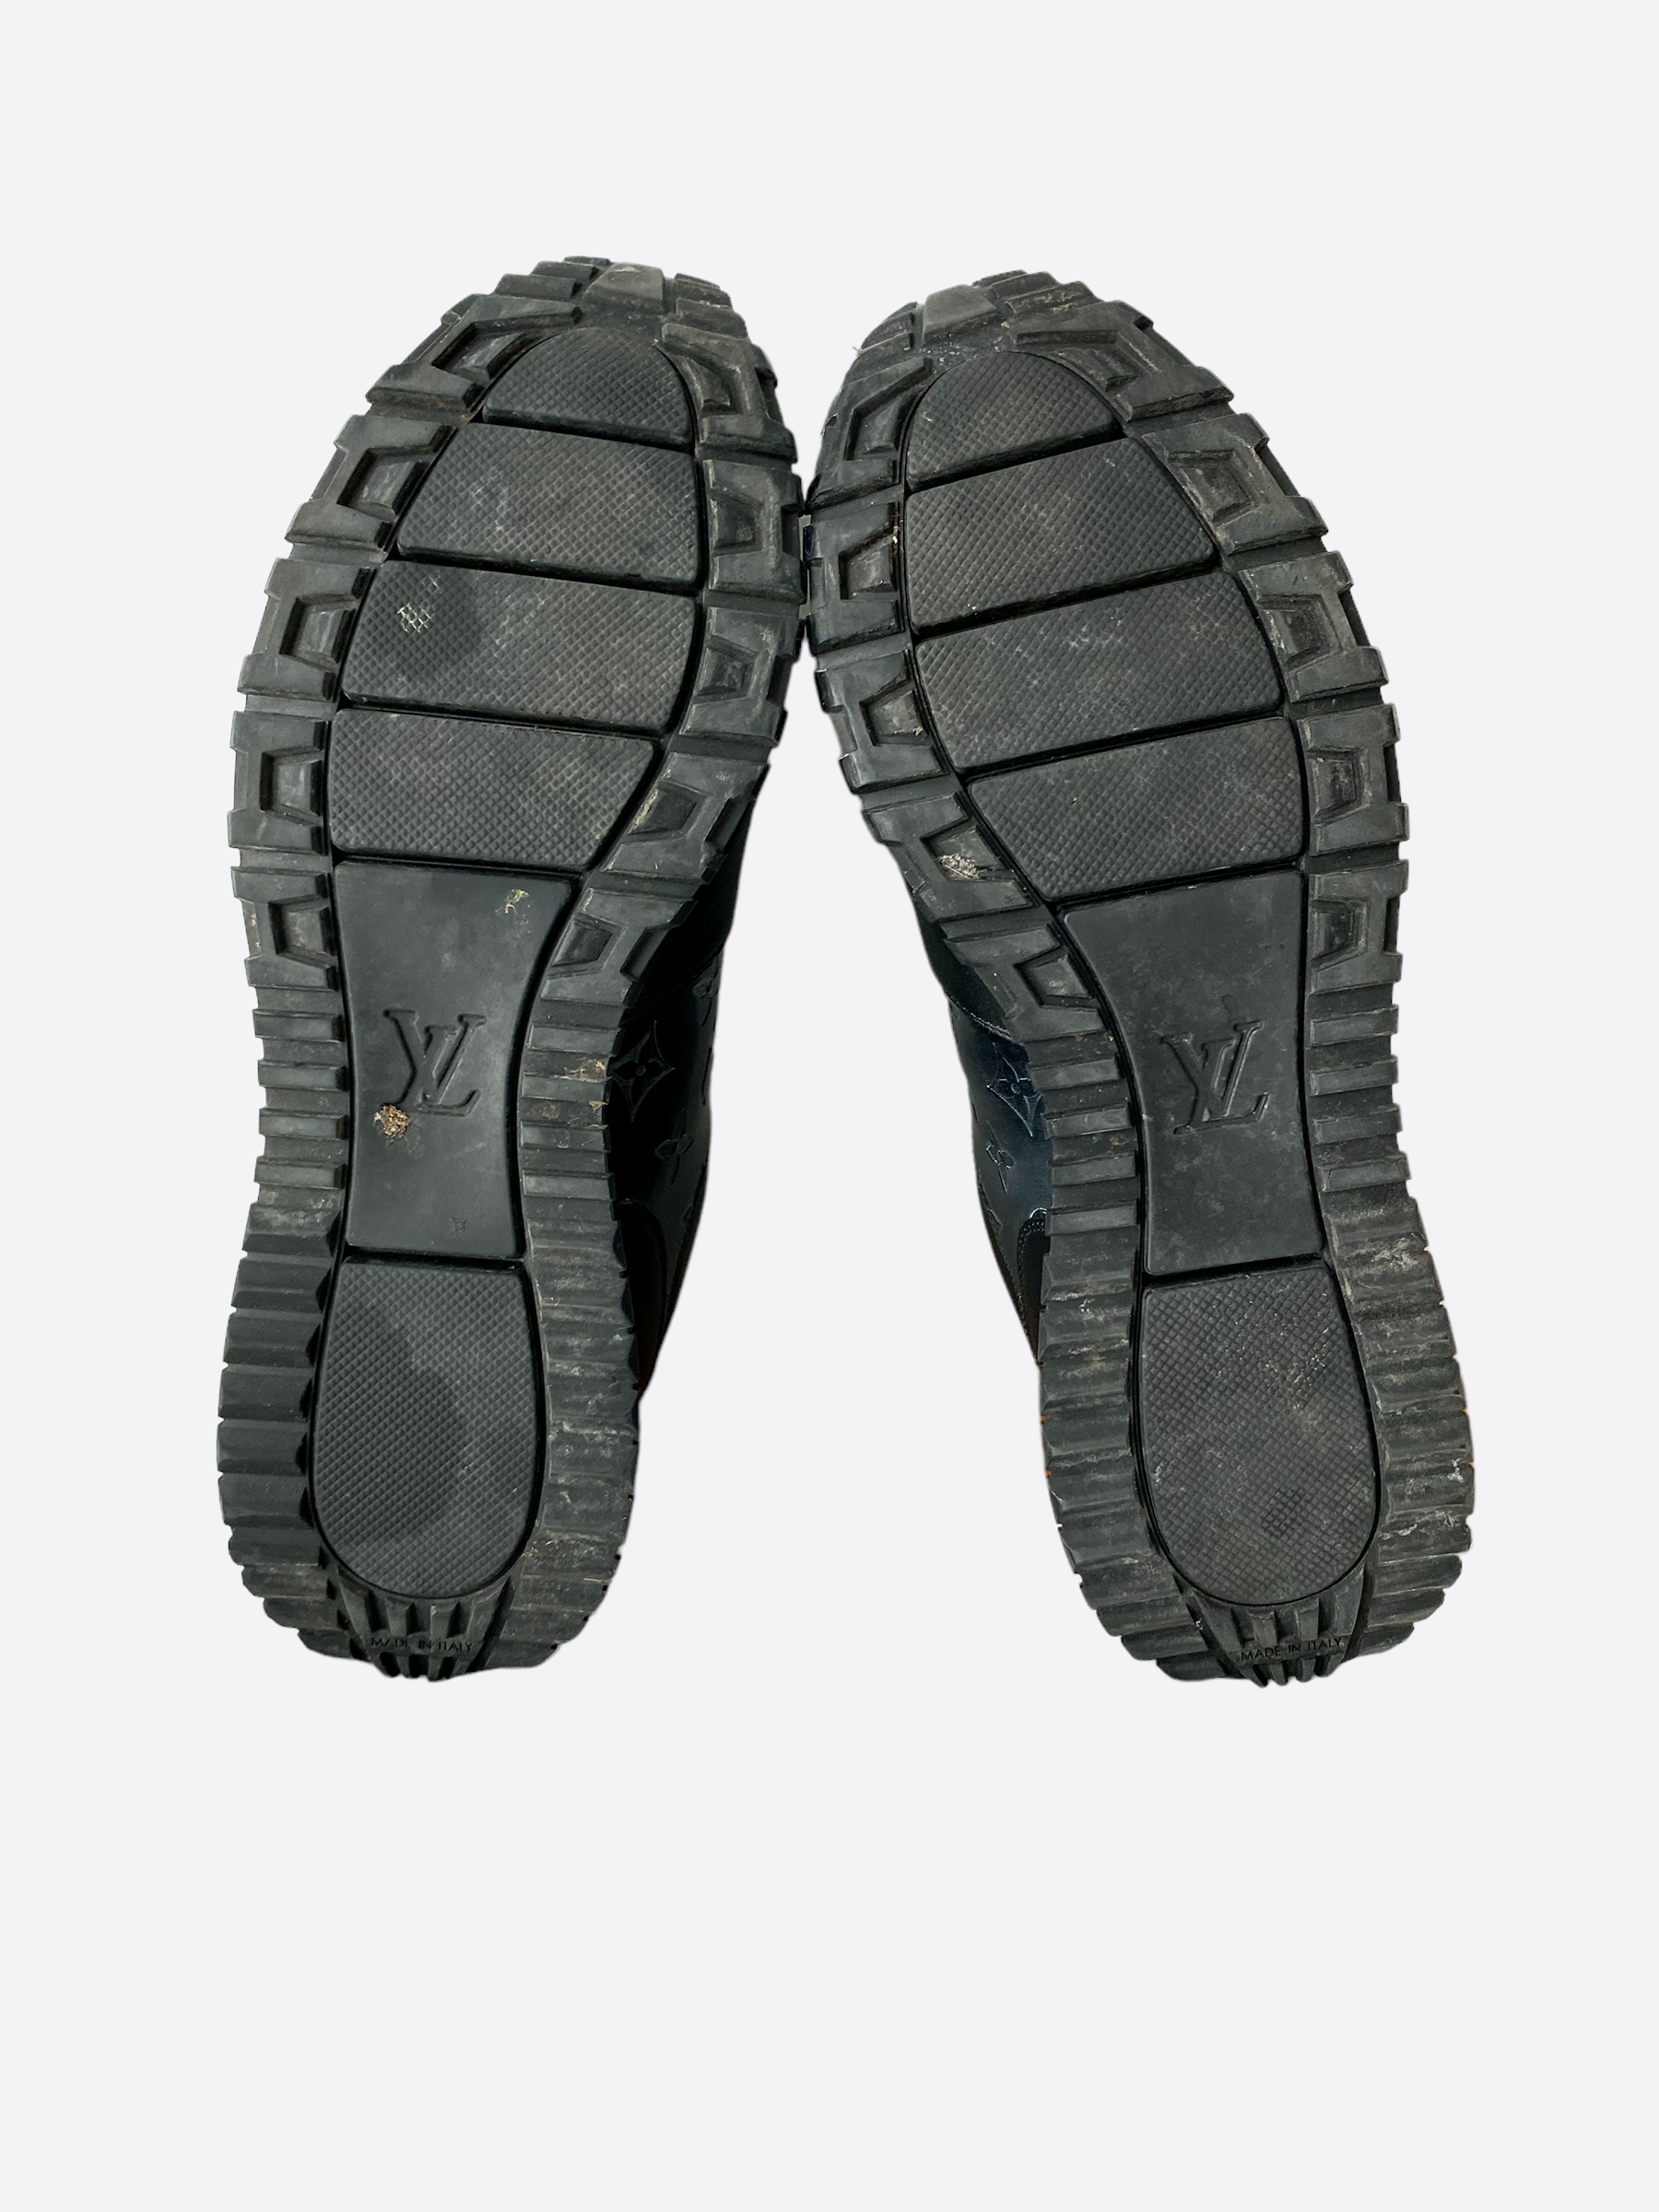 Louis Vuitton Runaway Monogram Sneakers 100% Authentic Size 8LV